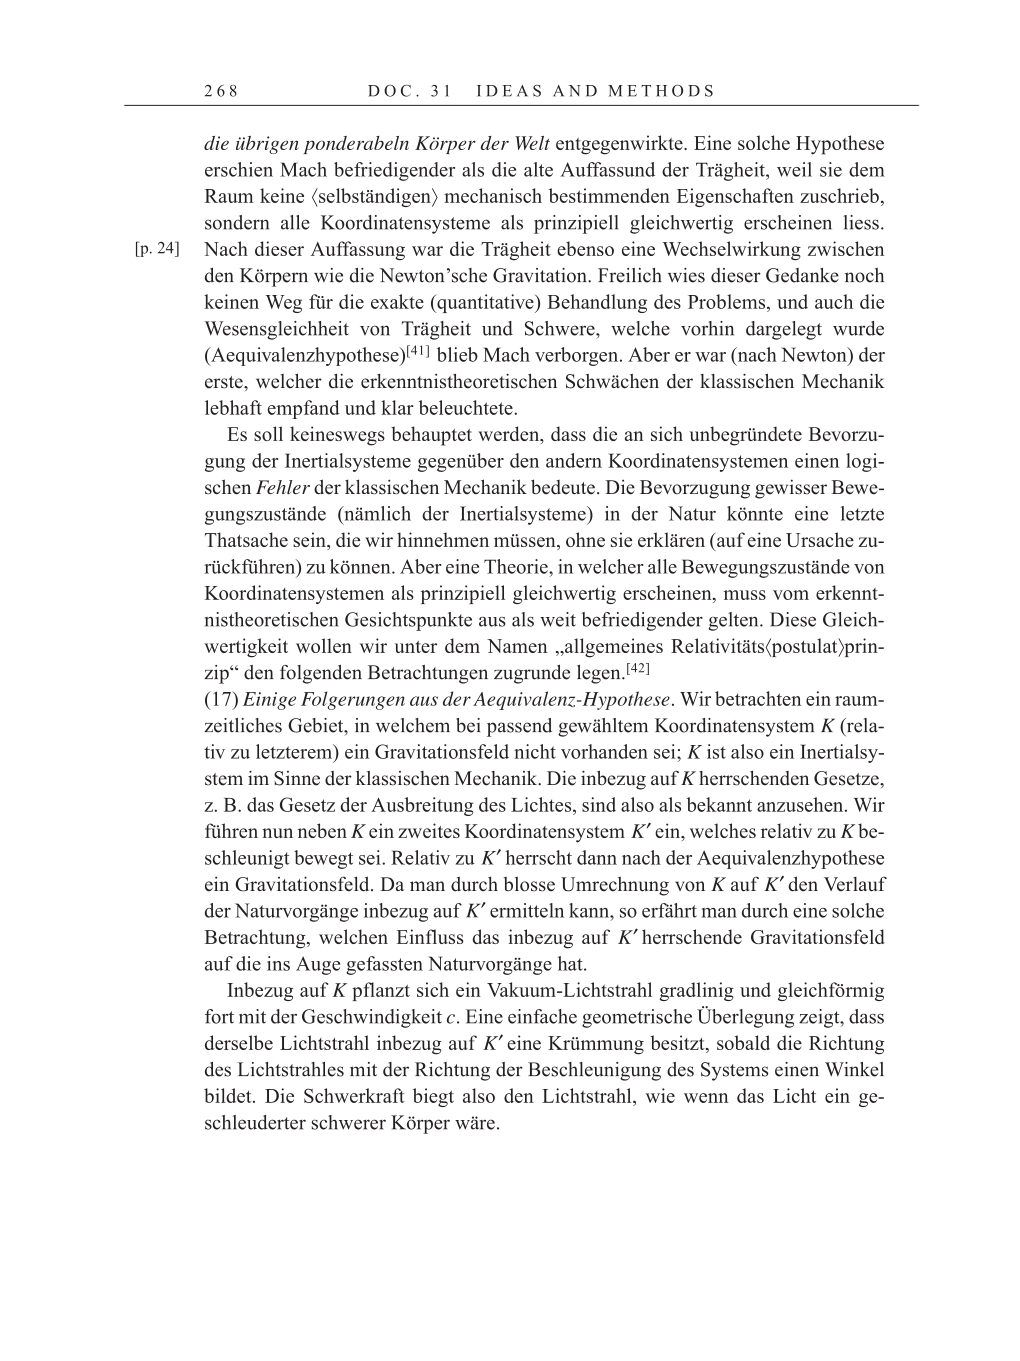 Volume 7: The Berlin Years: Writings, 1918-1921 page 268